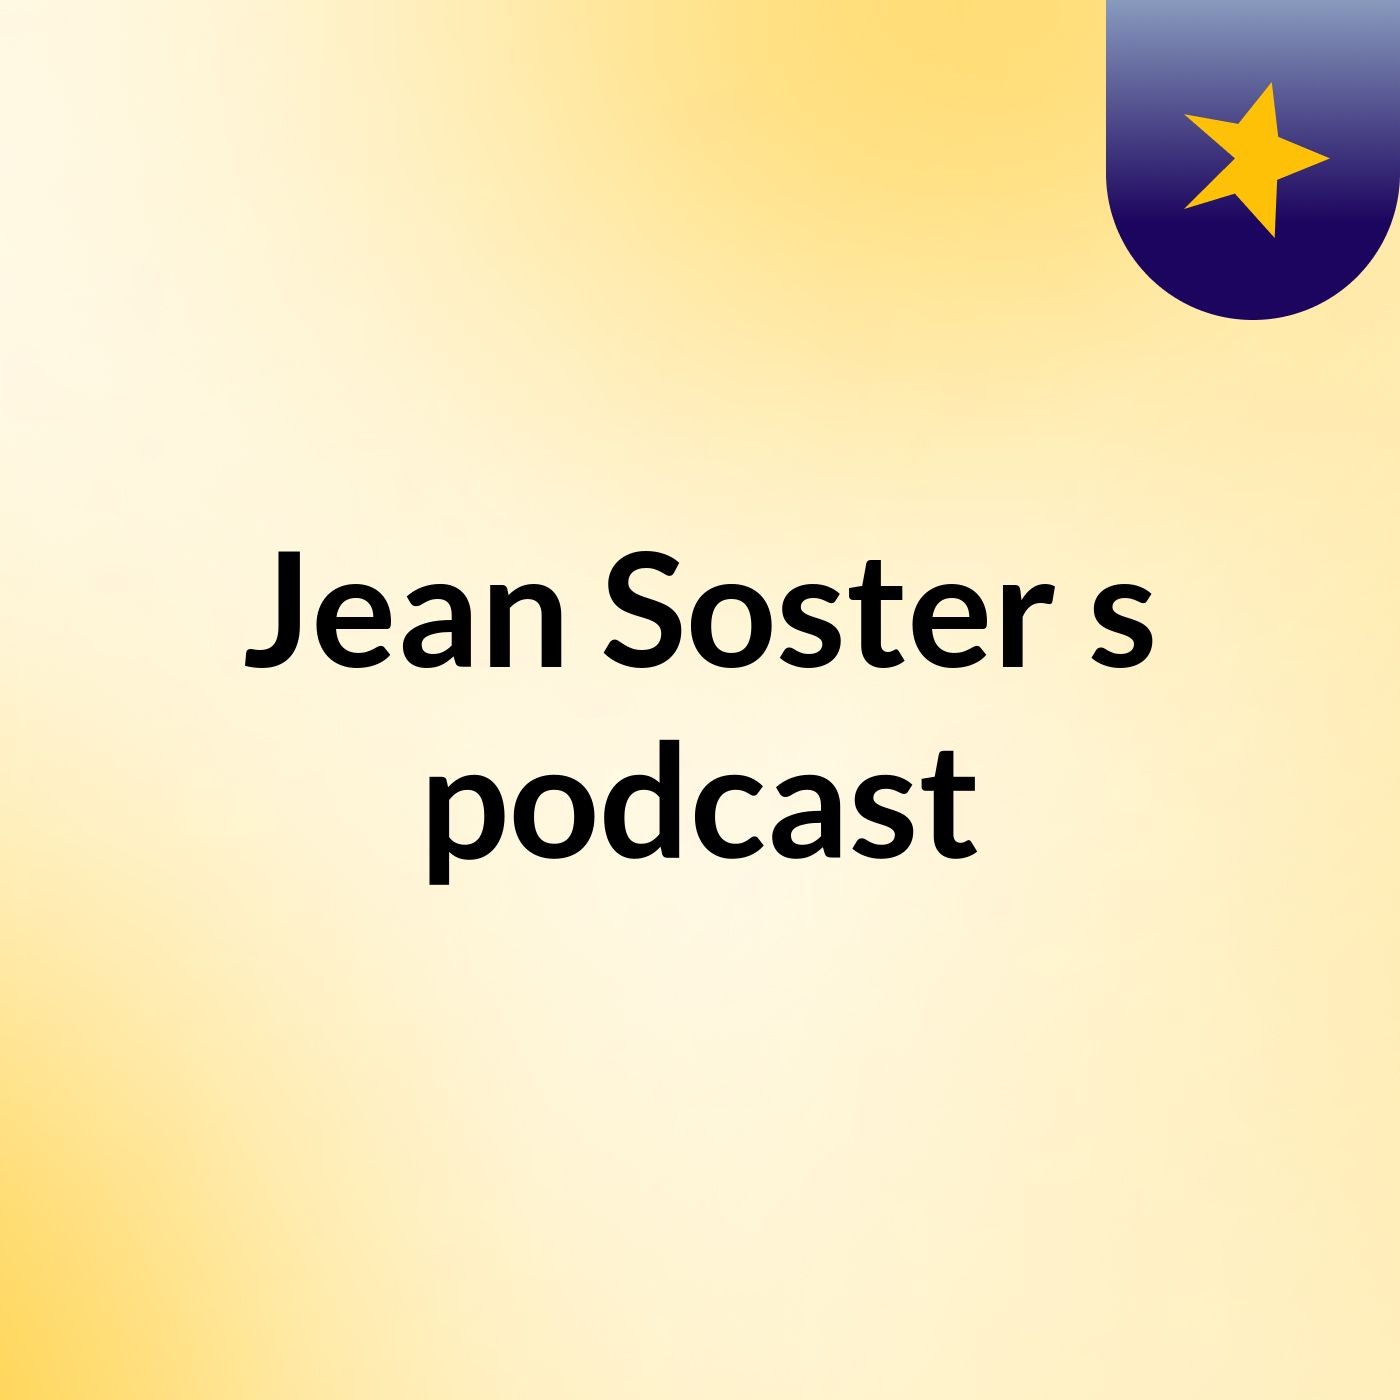 Jean Soster's podcast